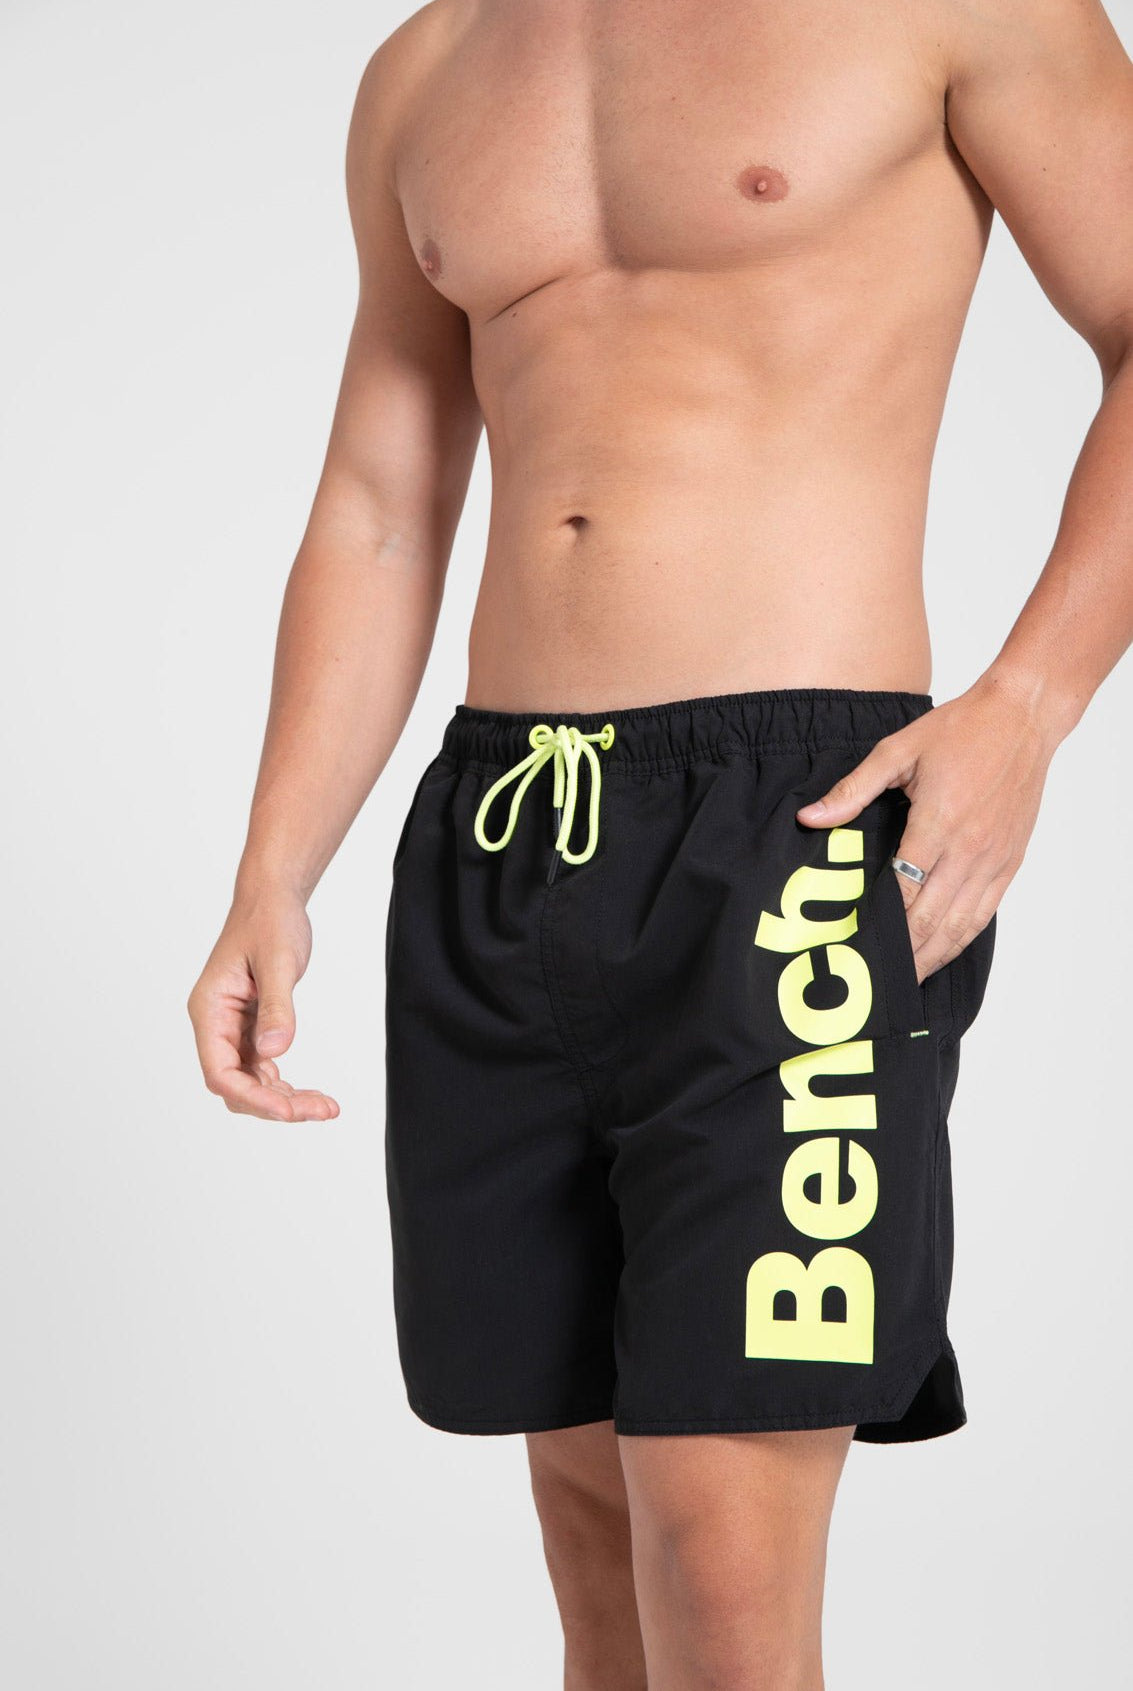 Mens 'TAHITI' Swim Shorts - BLACK - Shop at www.Bench.co.uk #LoveMyHood